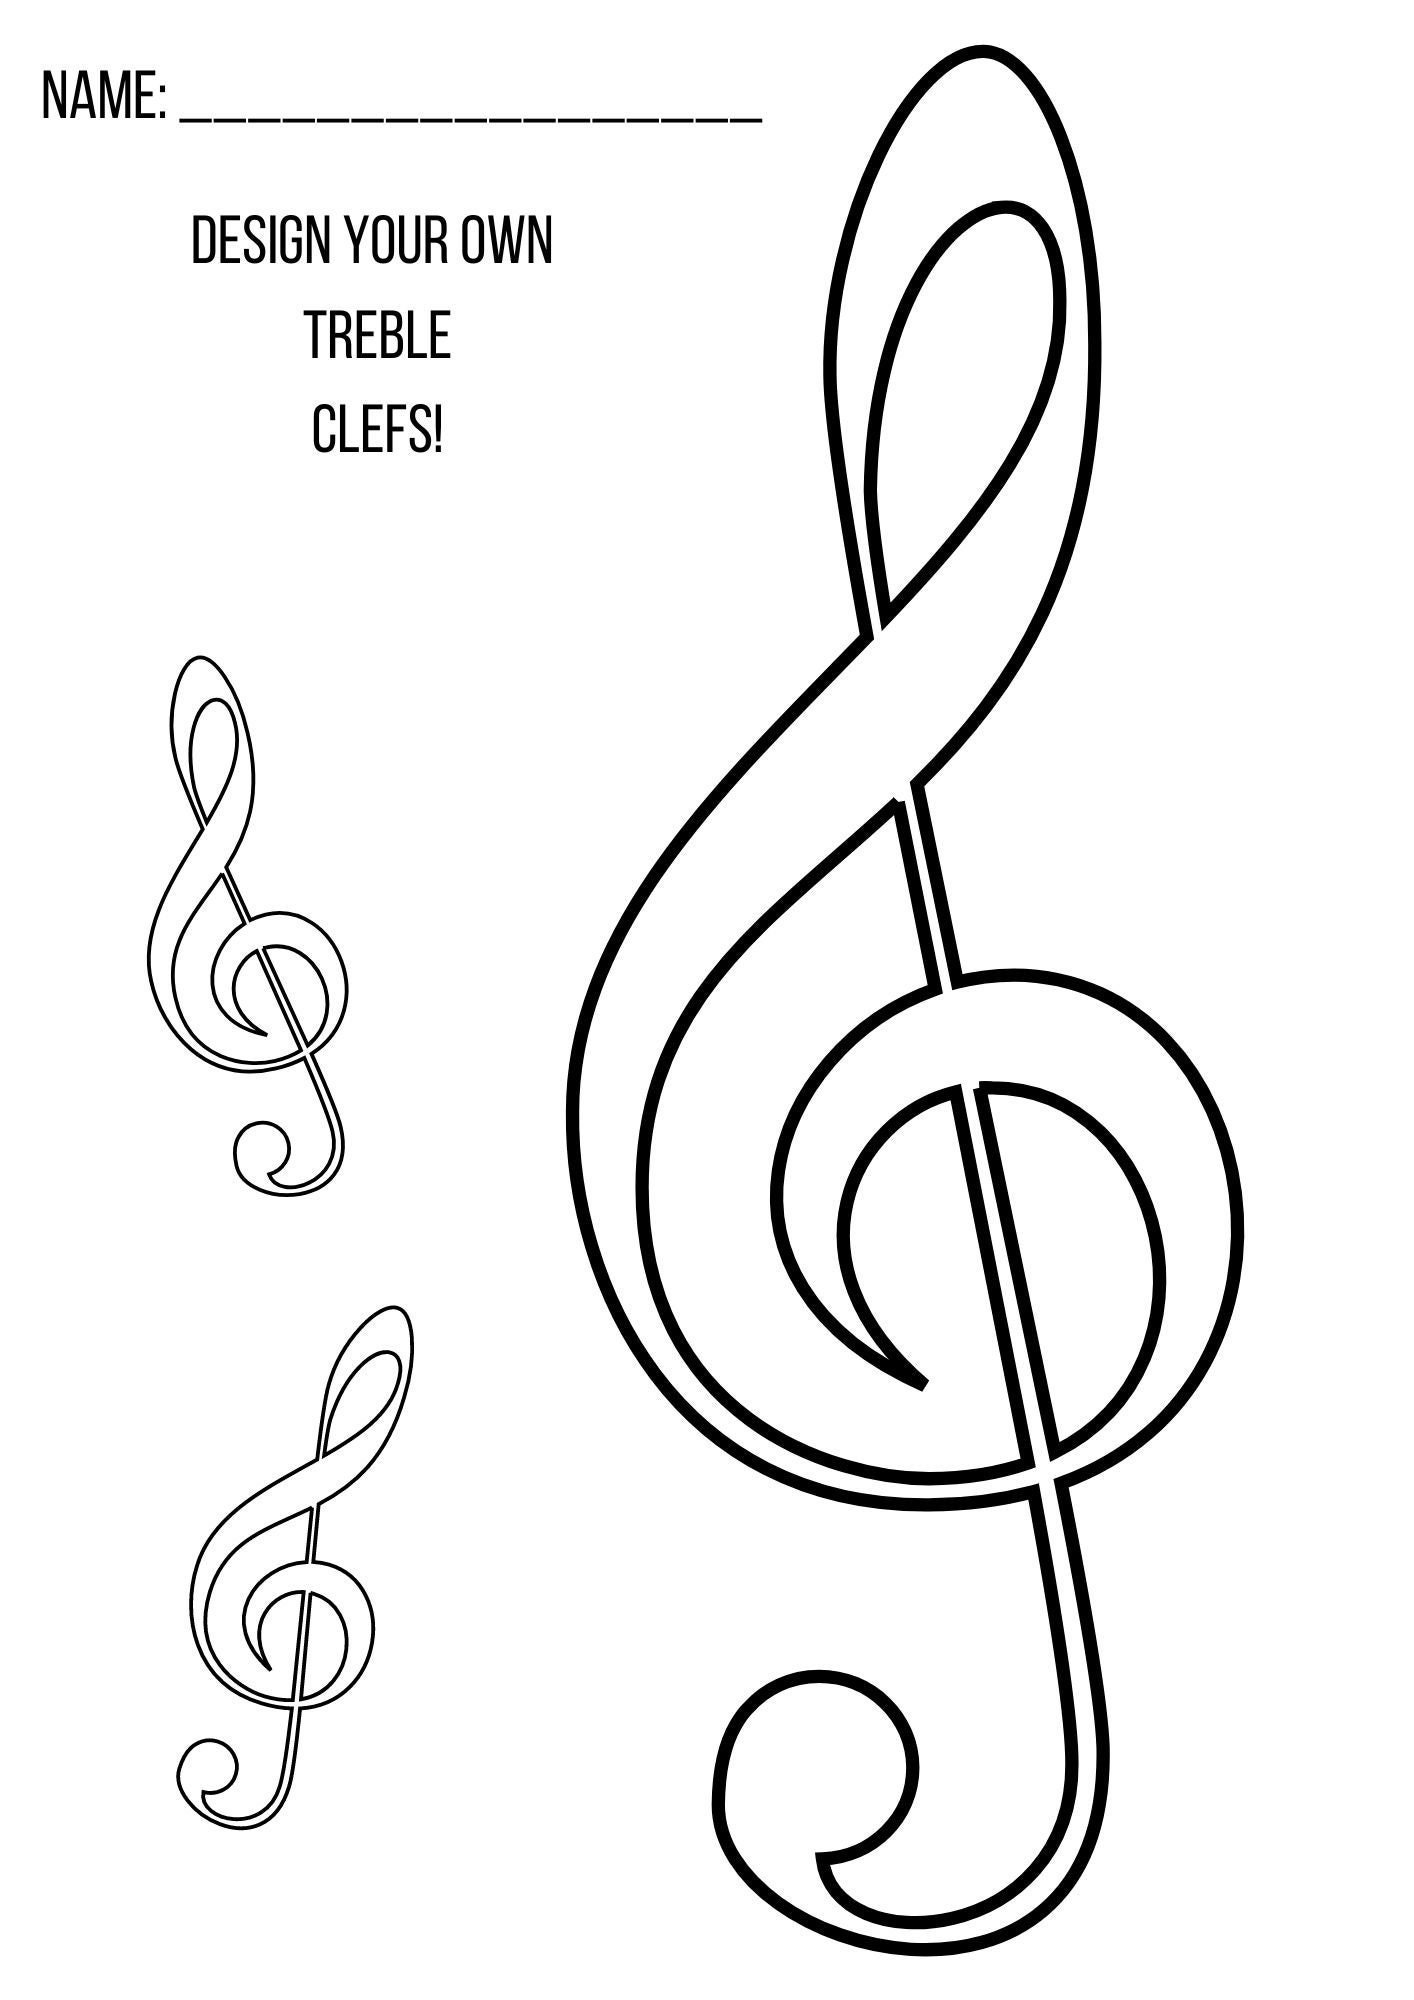 Design your own treble clef